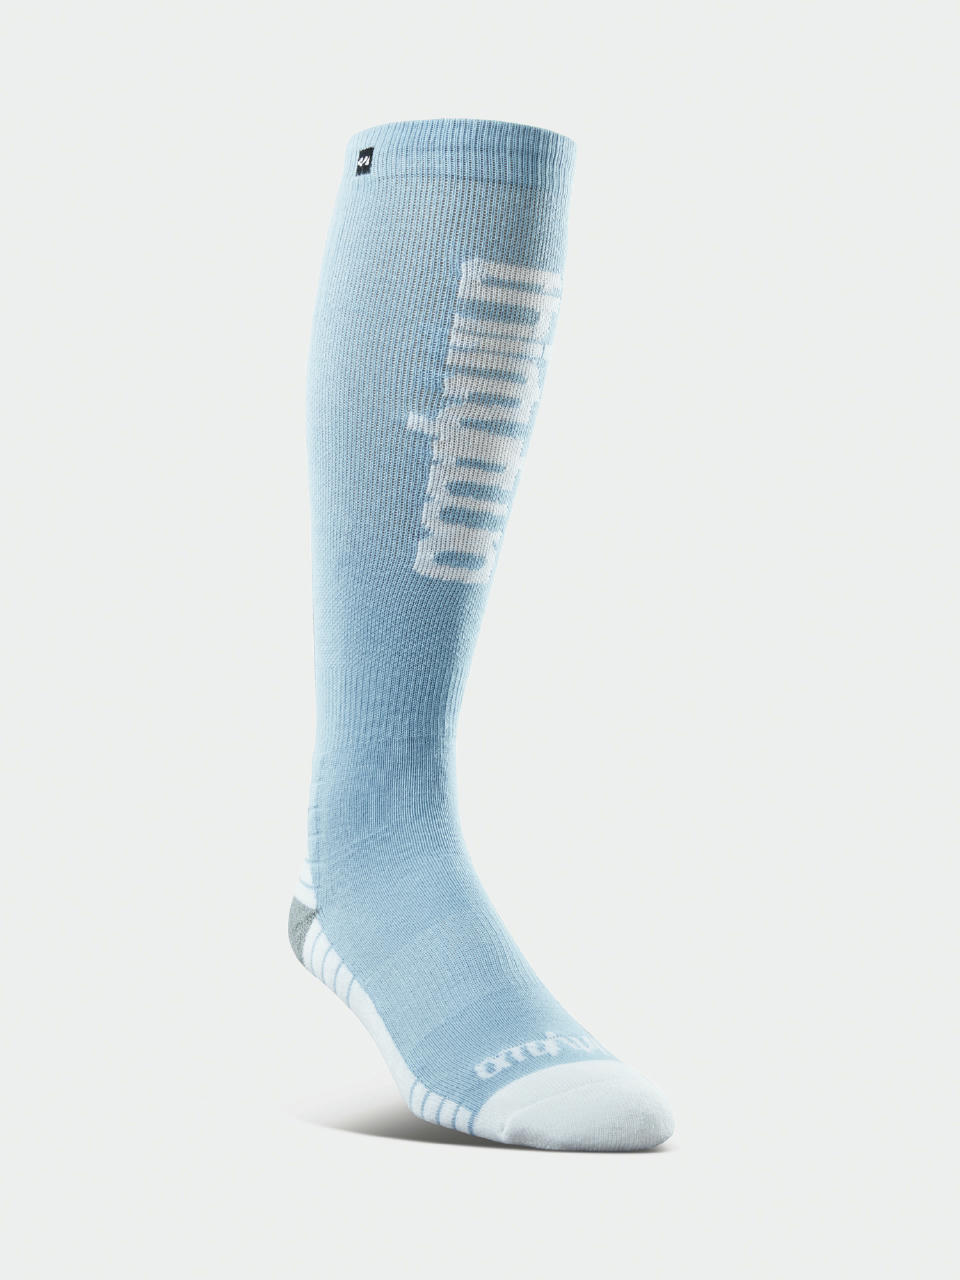 ThirtyTwo Double Socks Wmn (blue)